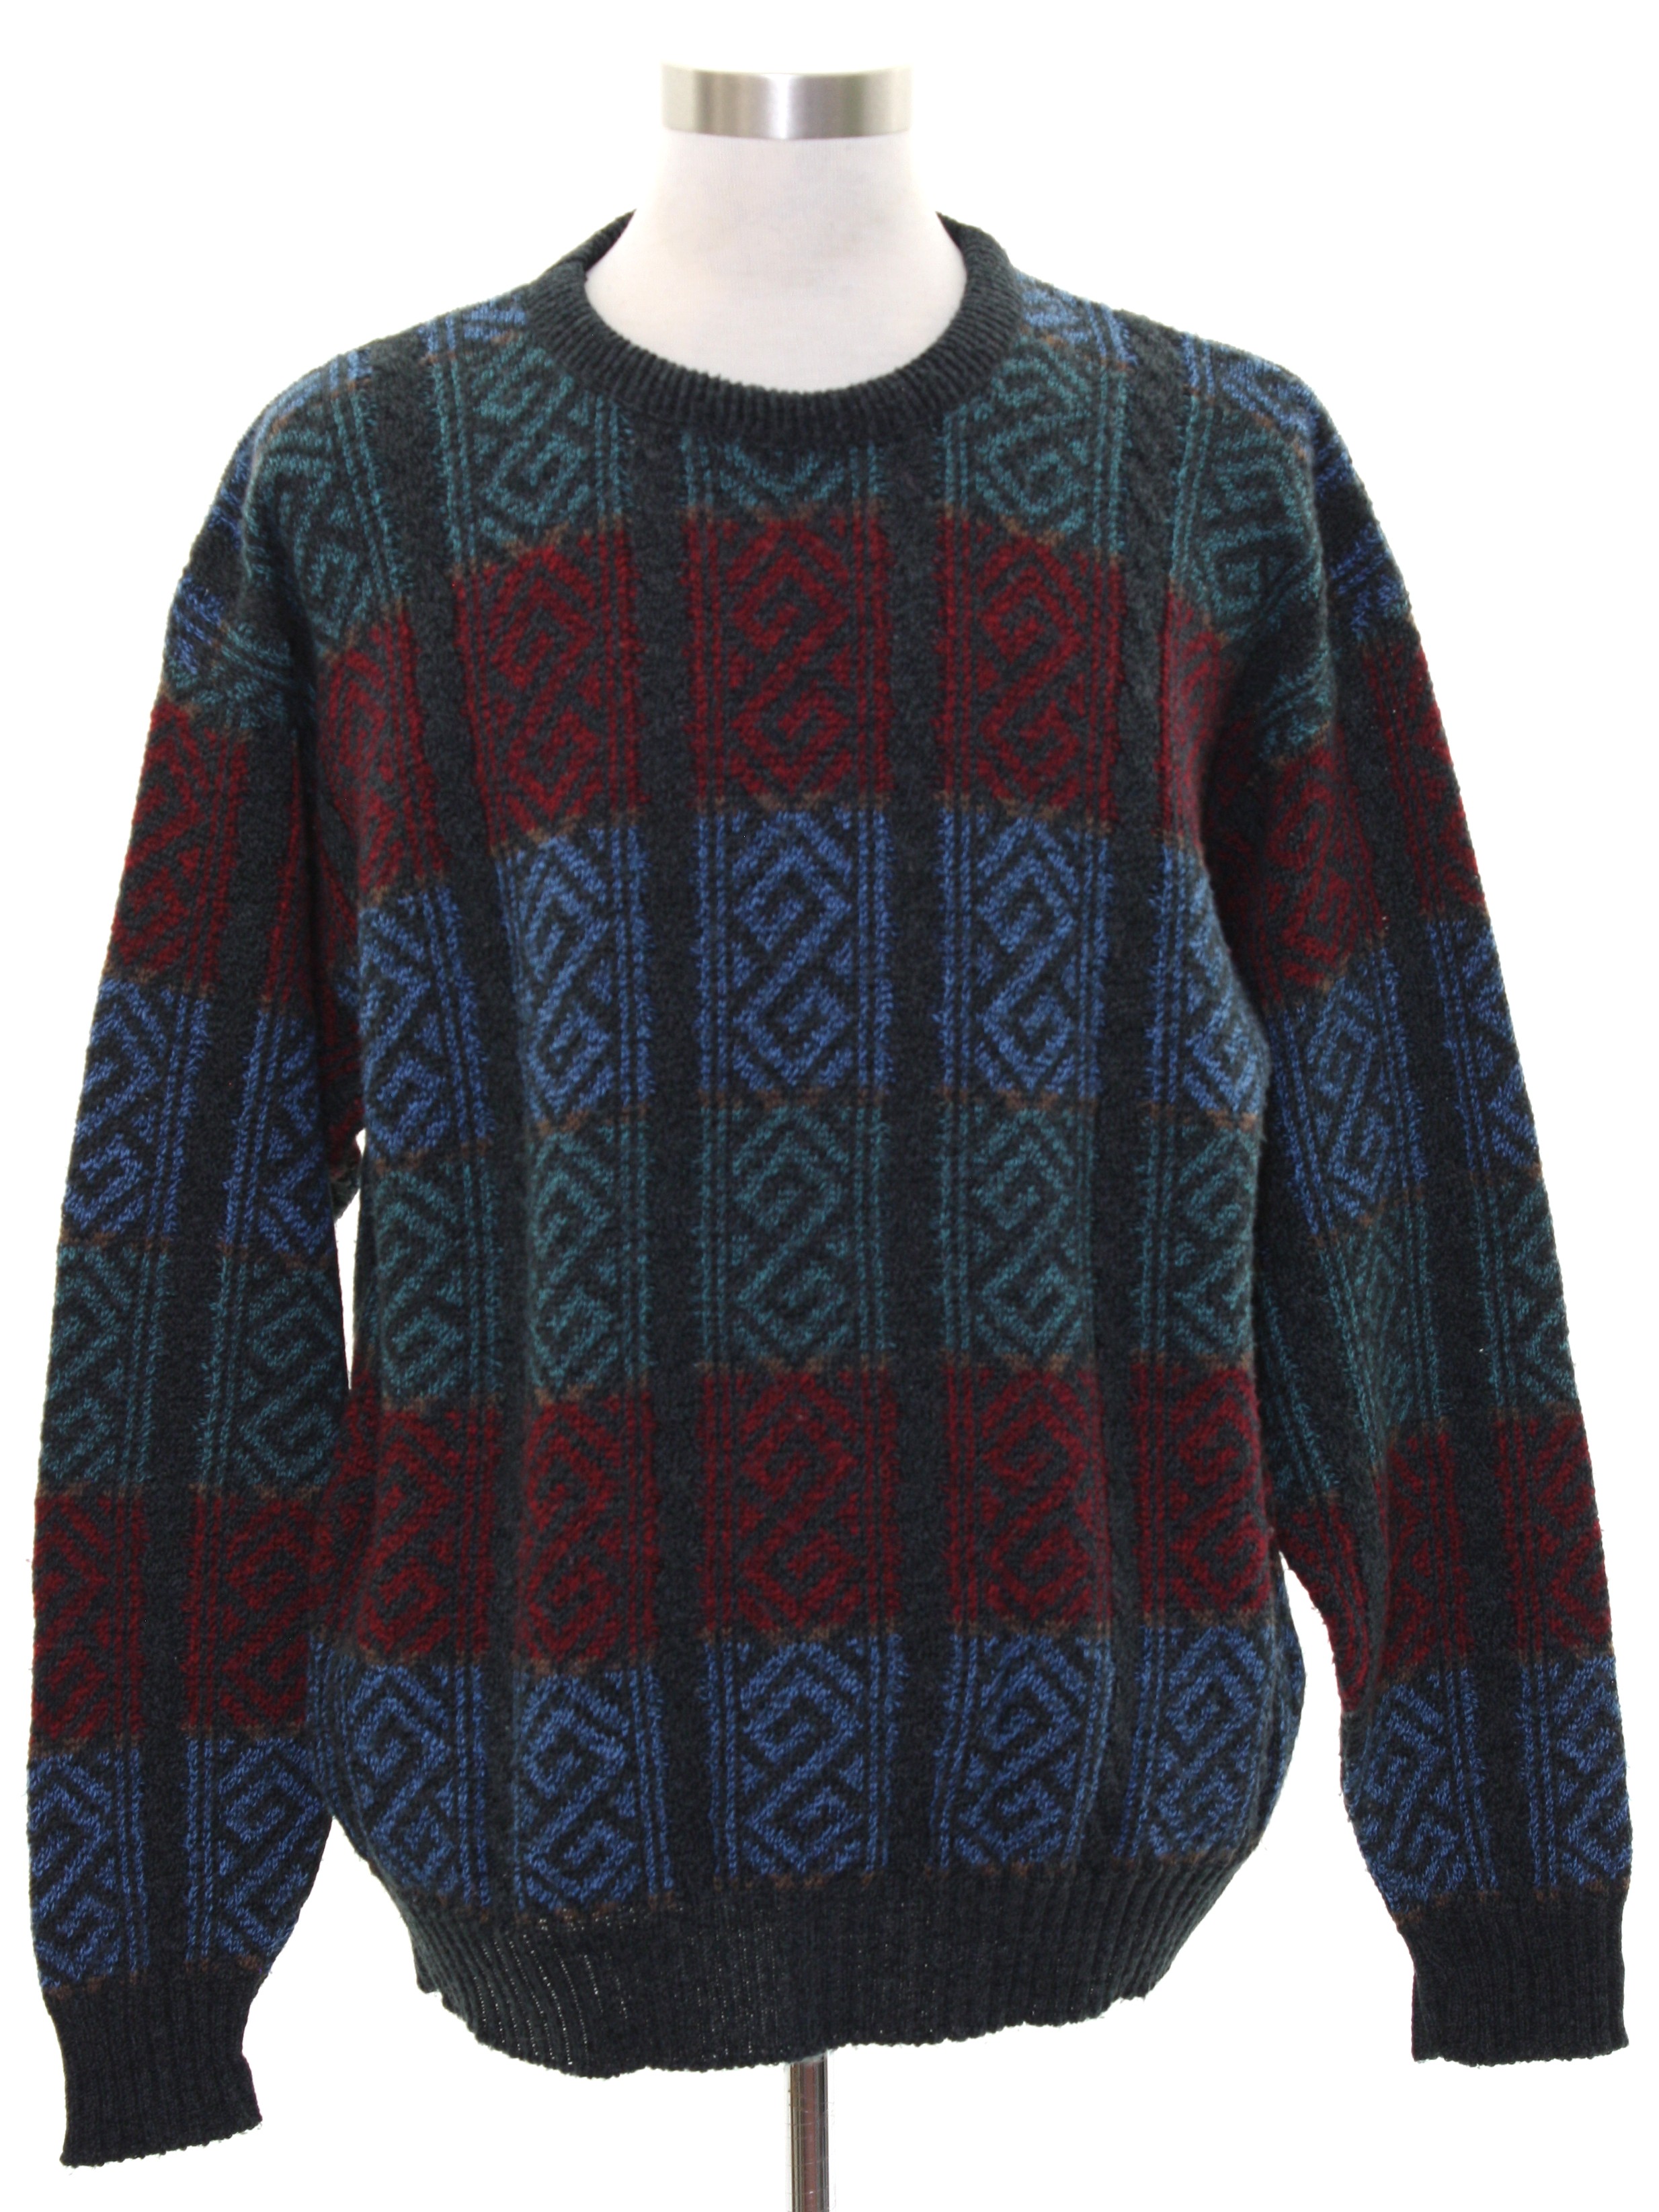 1980s Jantzen Sweater: 80s -Jantzen- Mens multicolored background ...